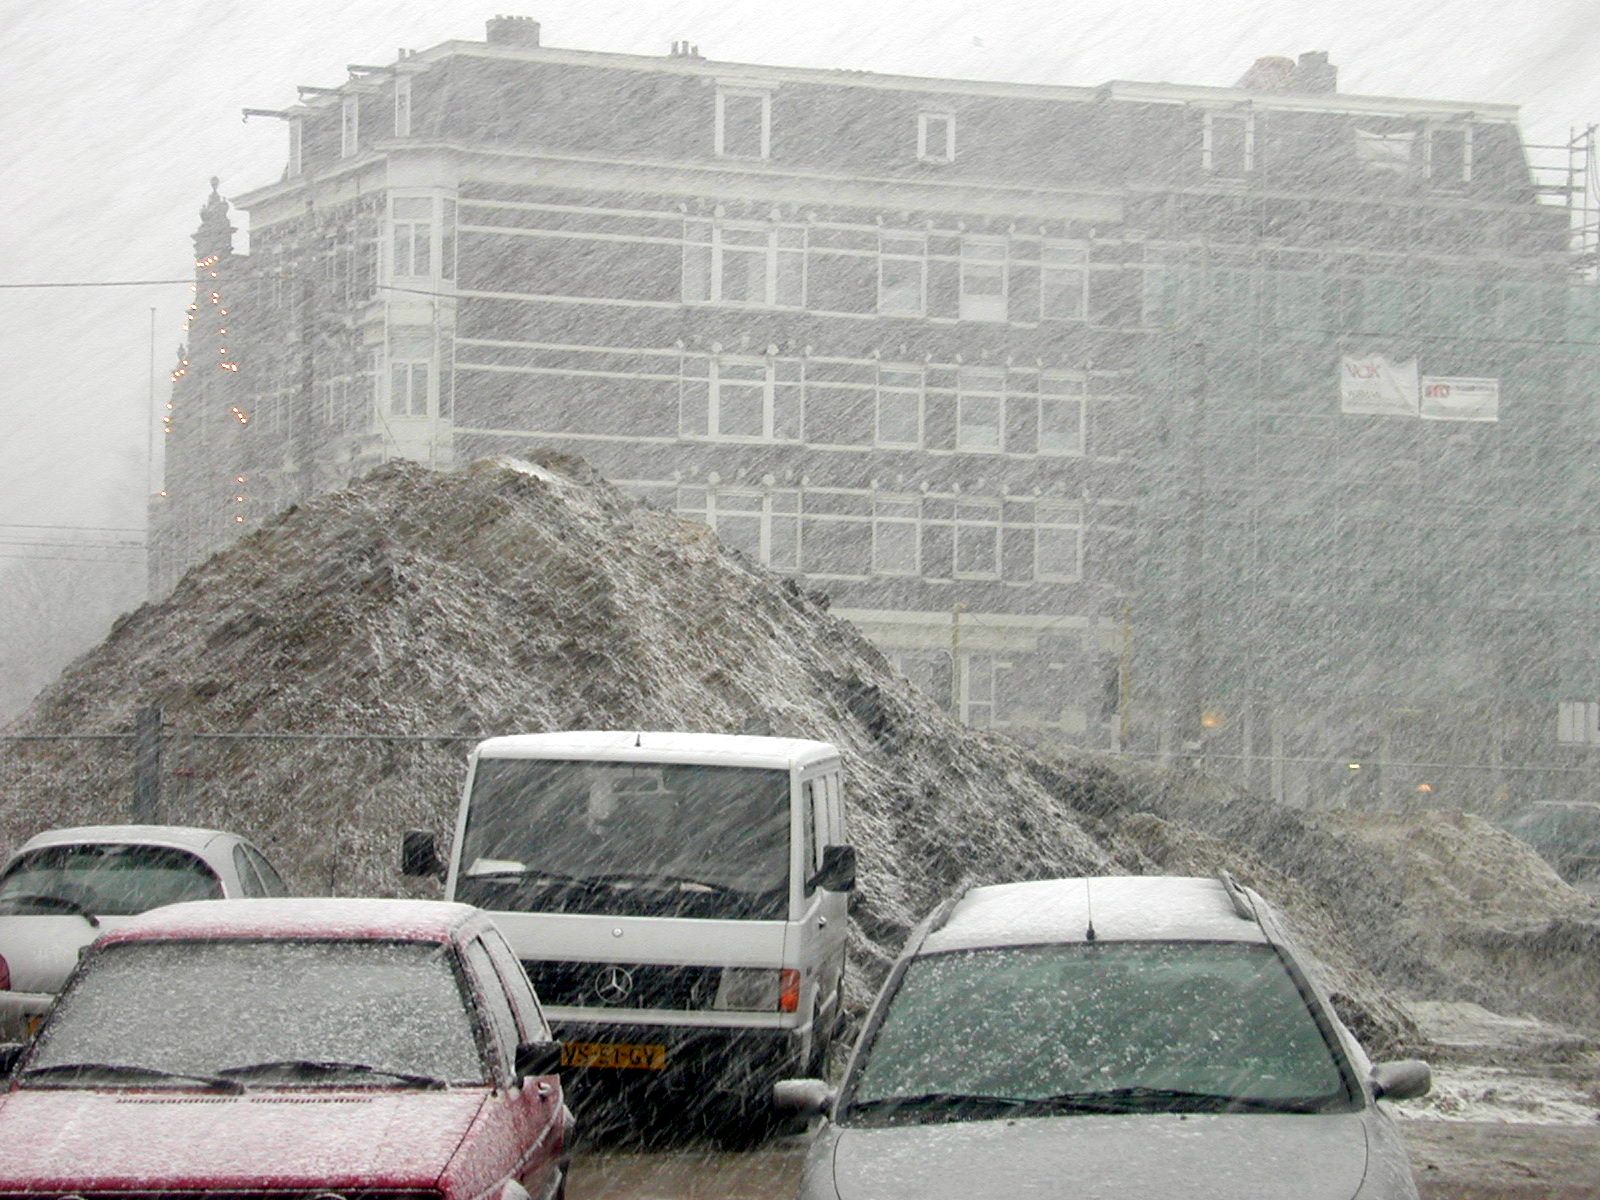 parkinglot winter snow snowing amsterdam pile sand city car cars hail cold